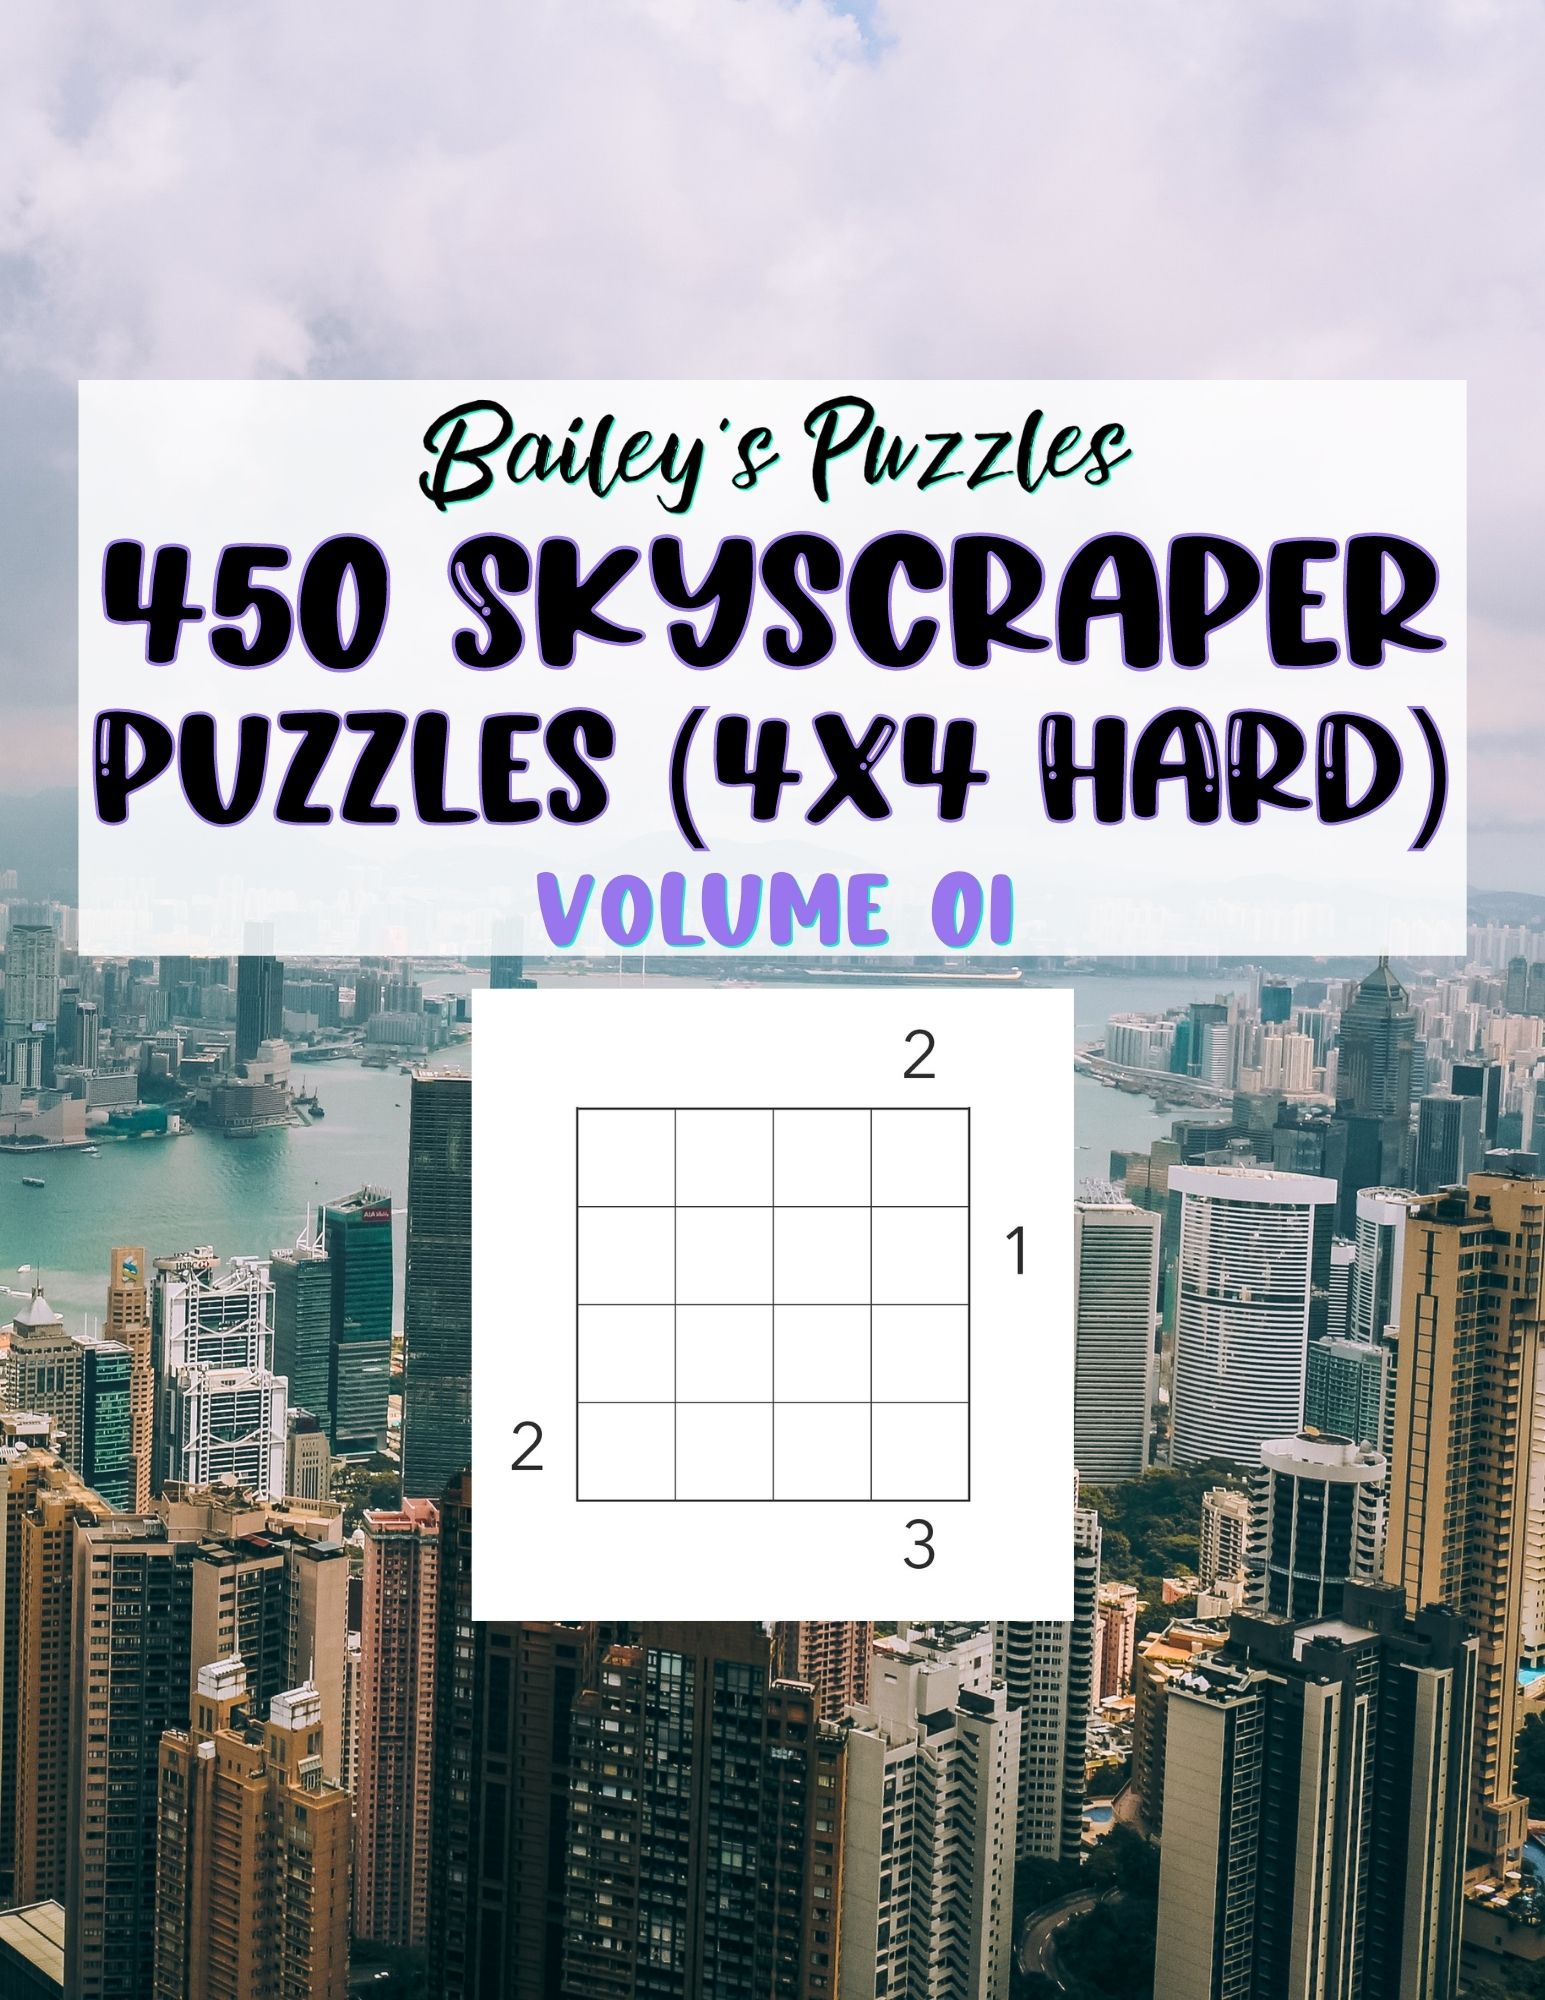 Front Cover - 450 Skyscraper Puzzles (4x4, hard)